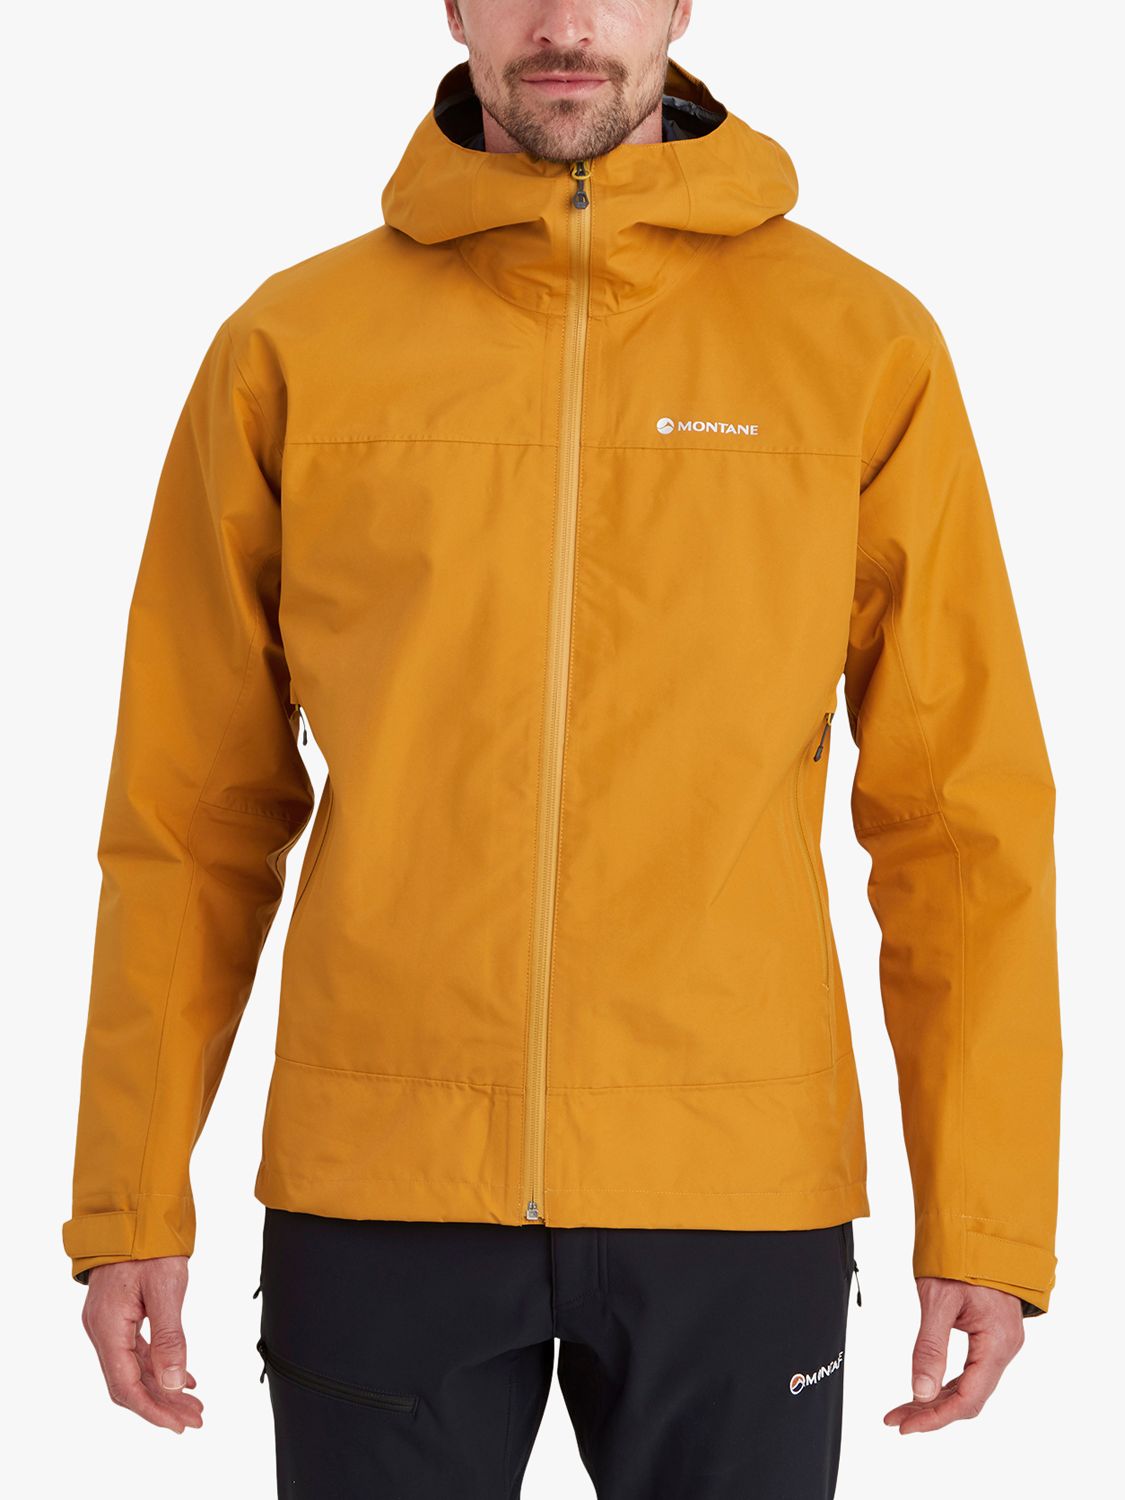 цена Мужская водонепроницаемая куртка Spirit Gore-Tex Montane, огненный оранжевый